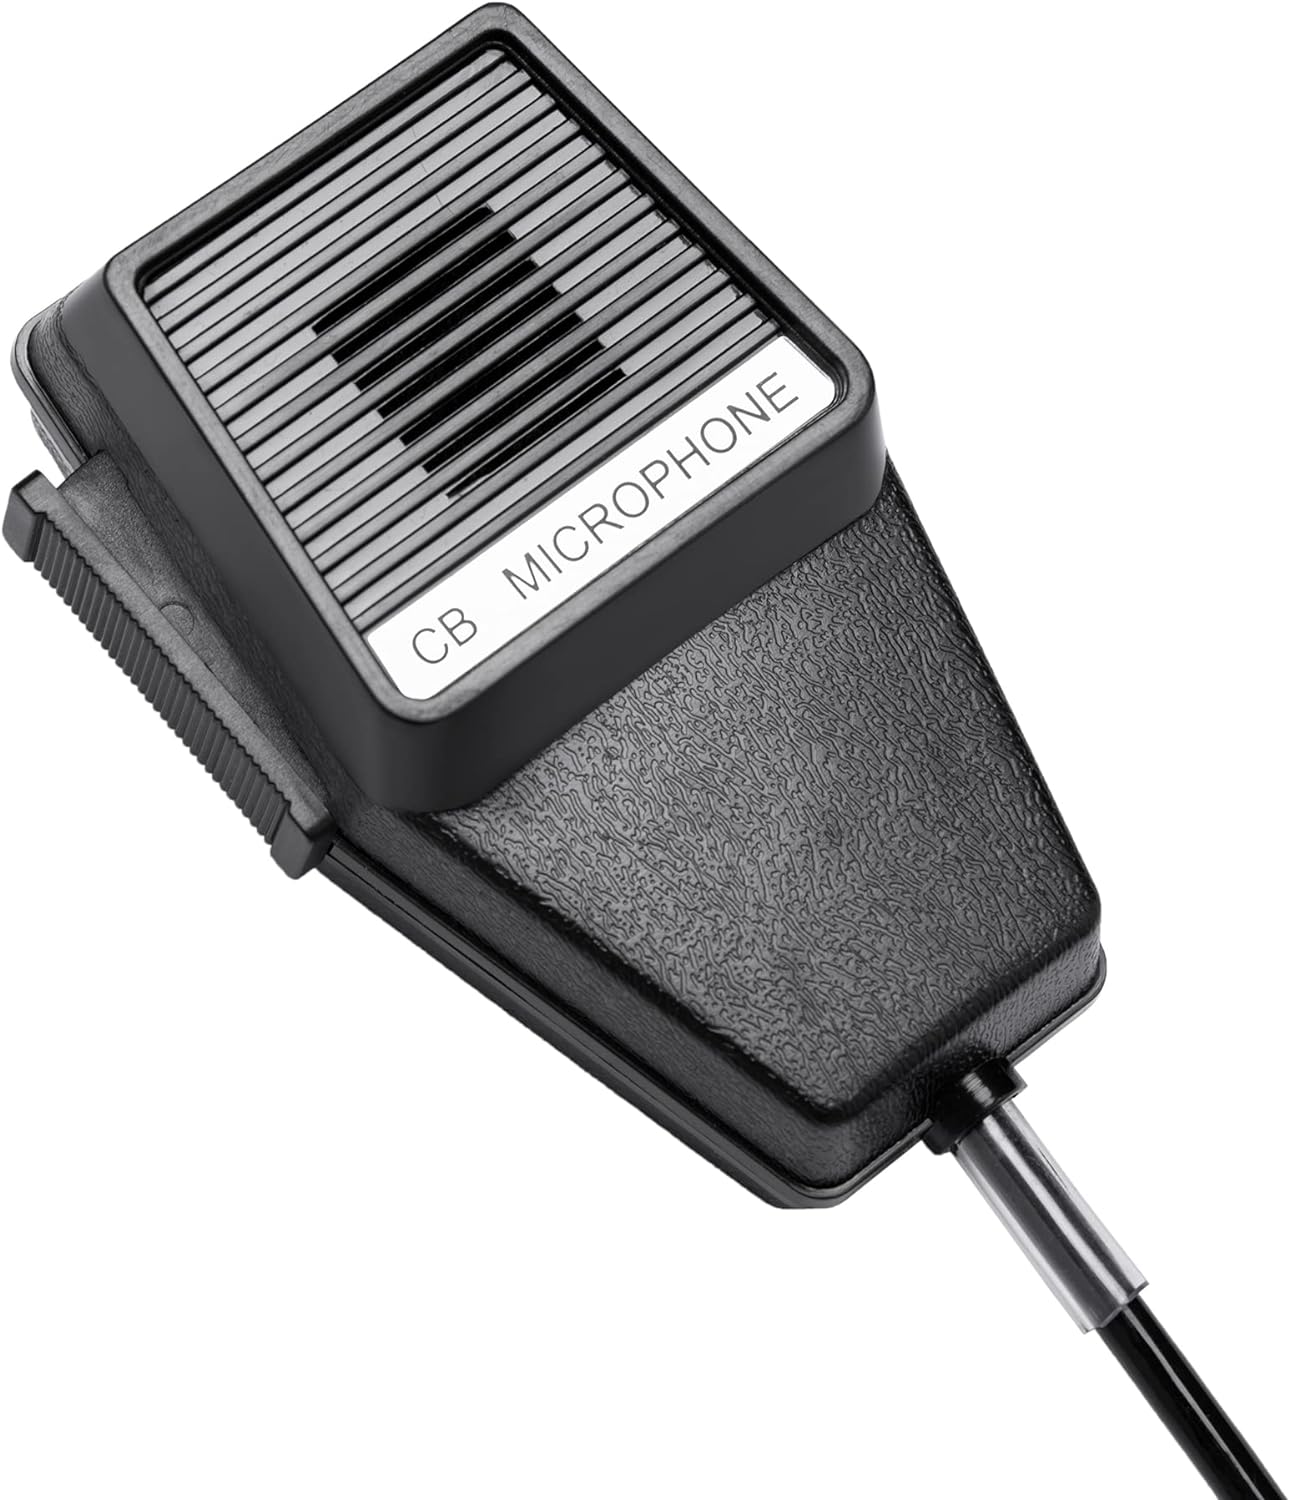 Fumei 4 PIN CB Microphone Speaker Compatible with Cobra Superstar Midland Uniden Audioline CB Radios